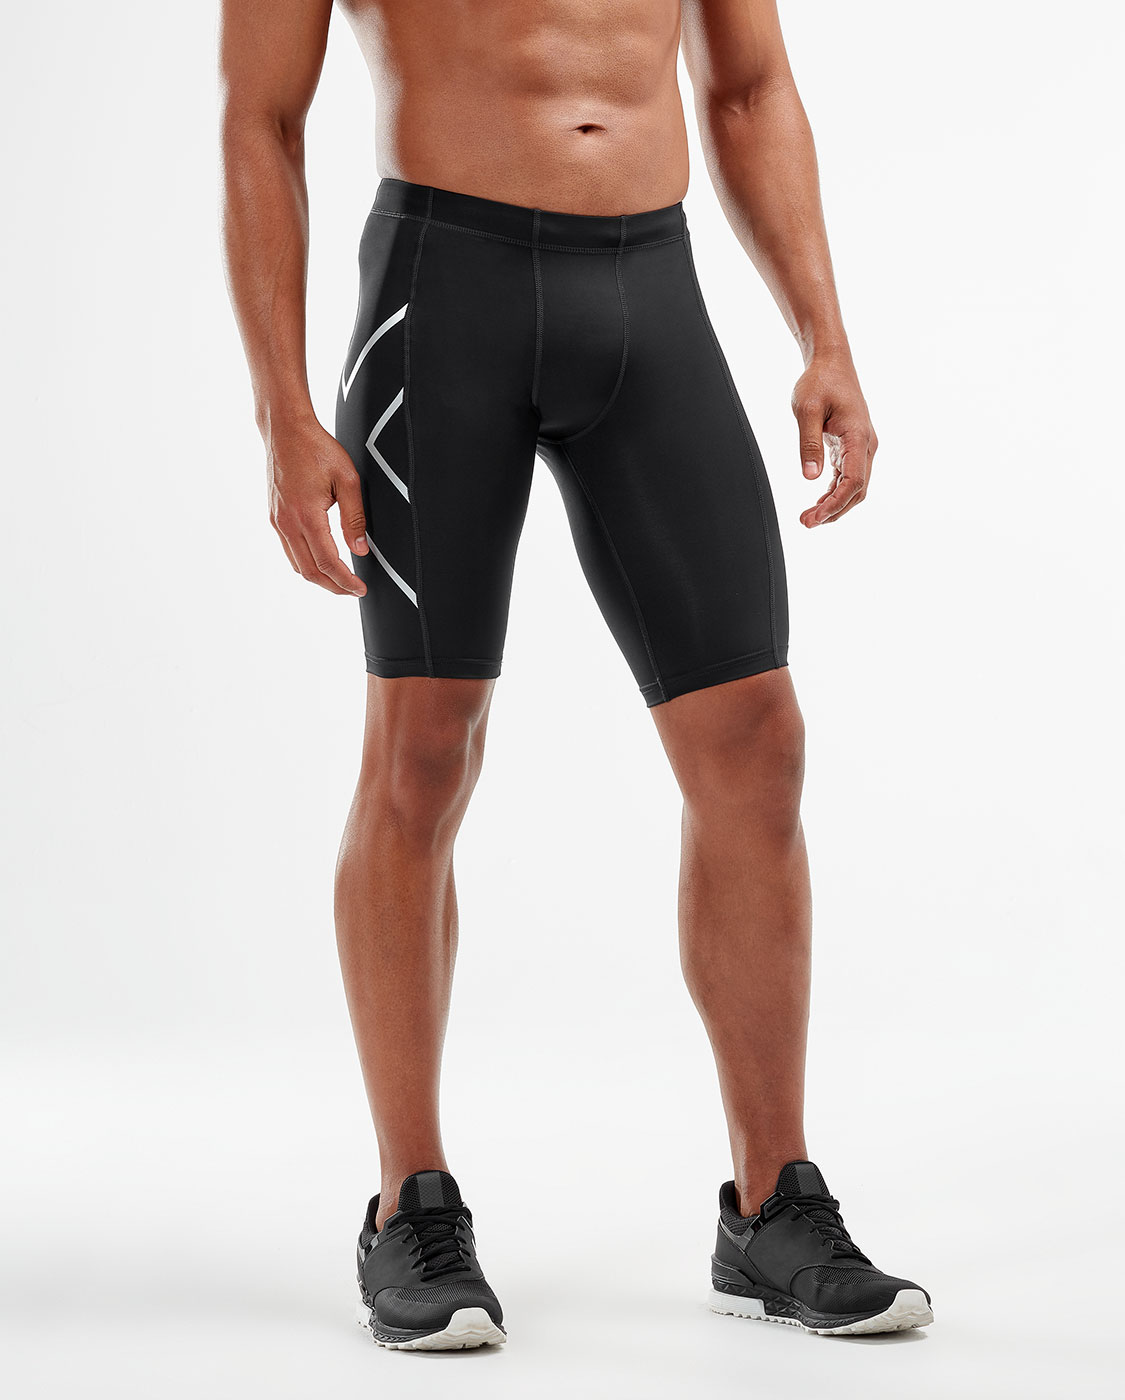 2XU Men's Compression Shorts - Black/Silver